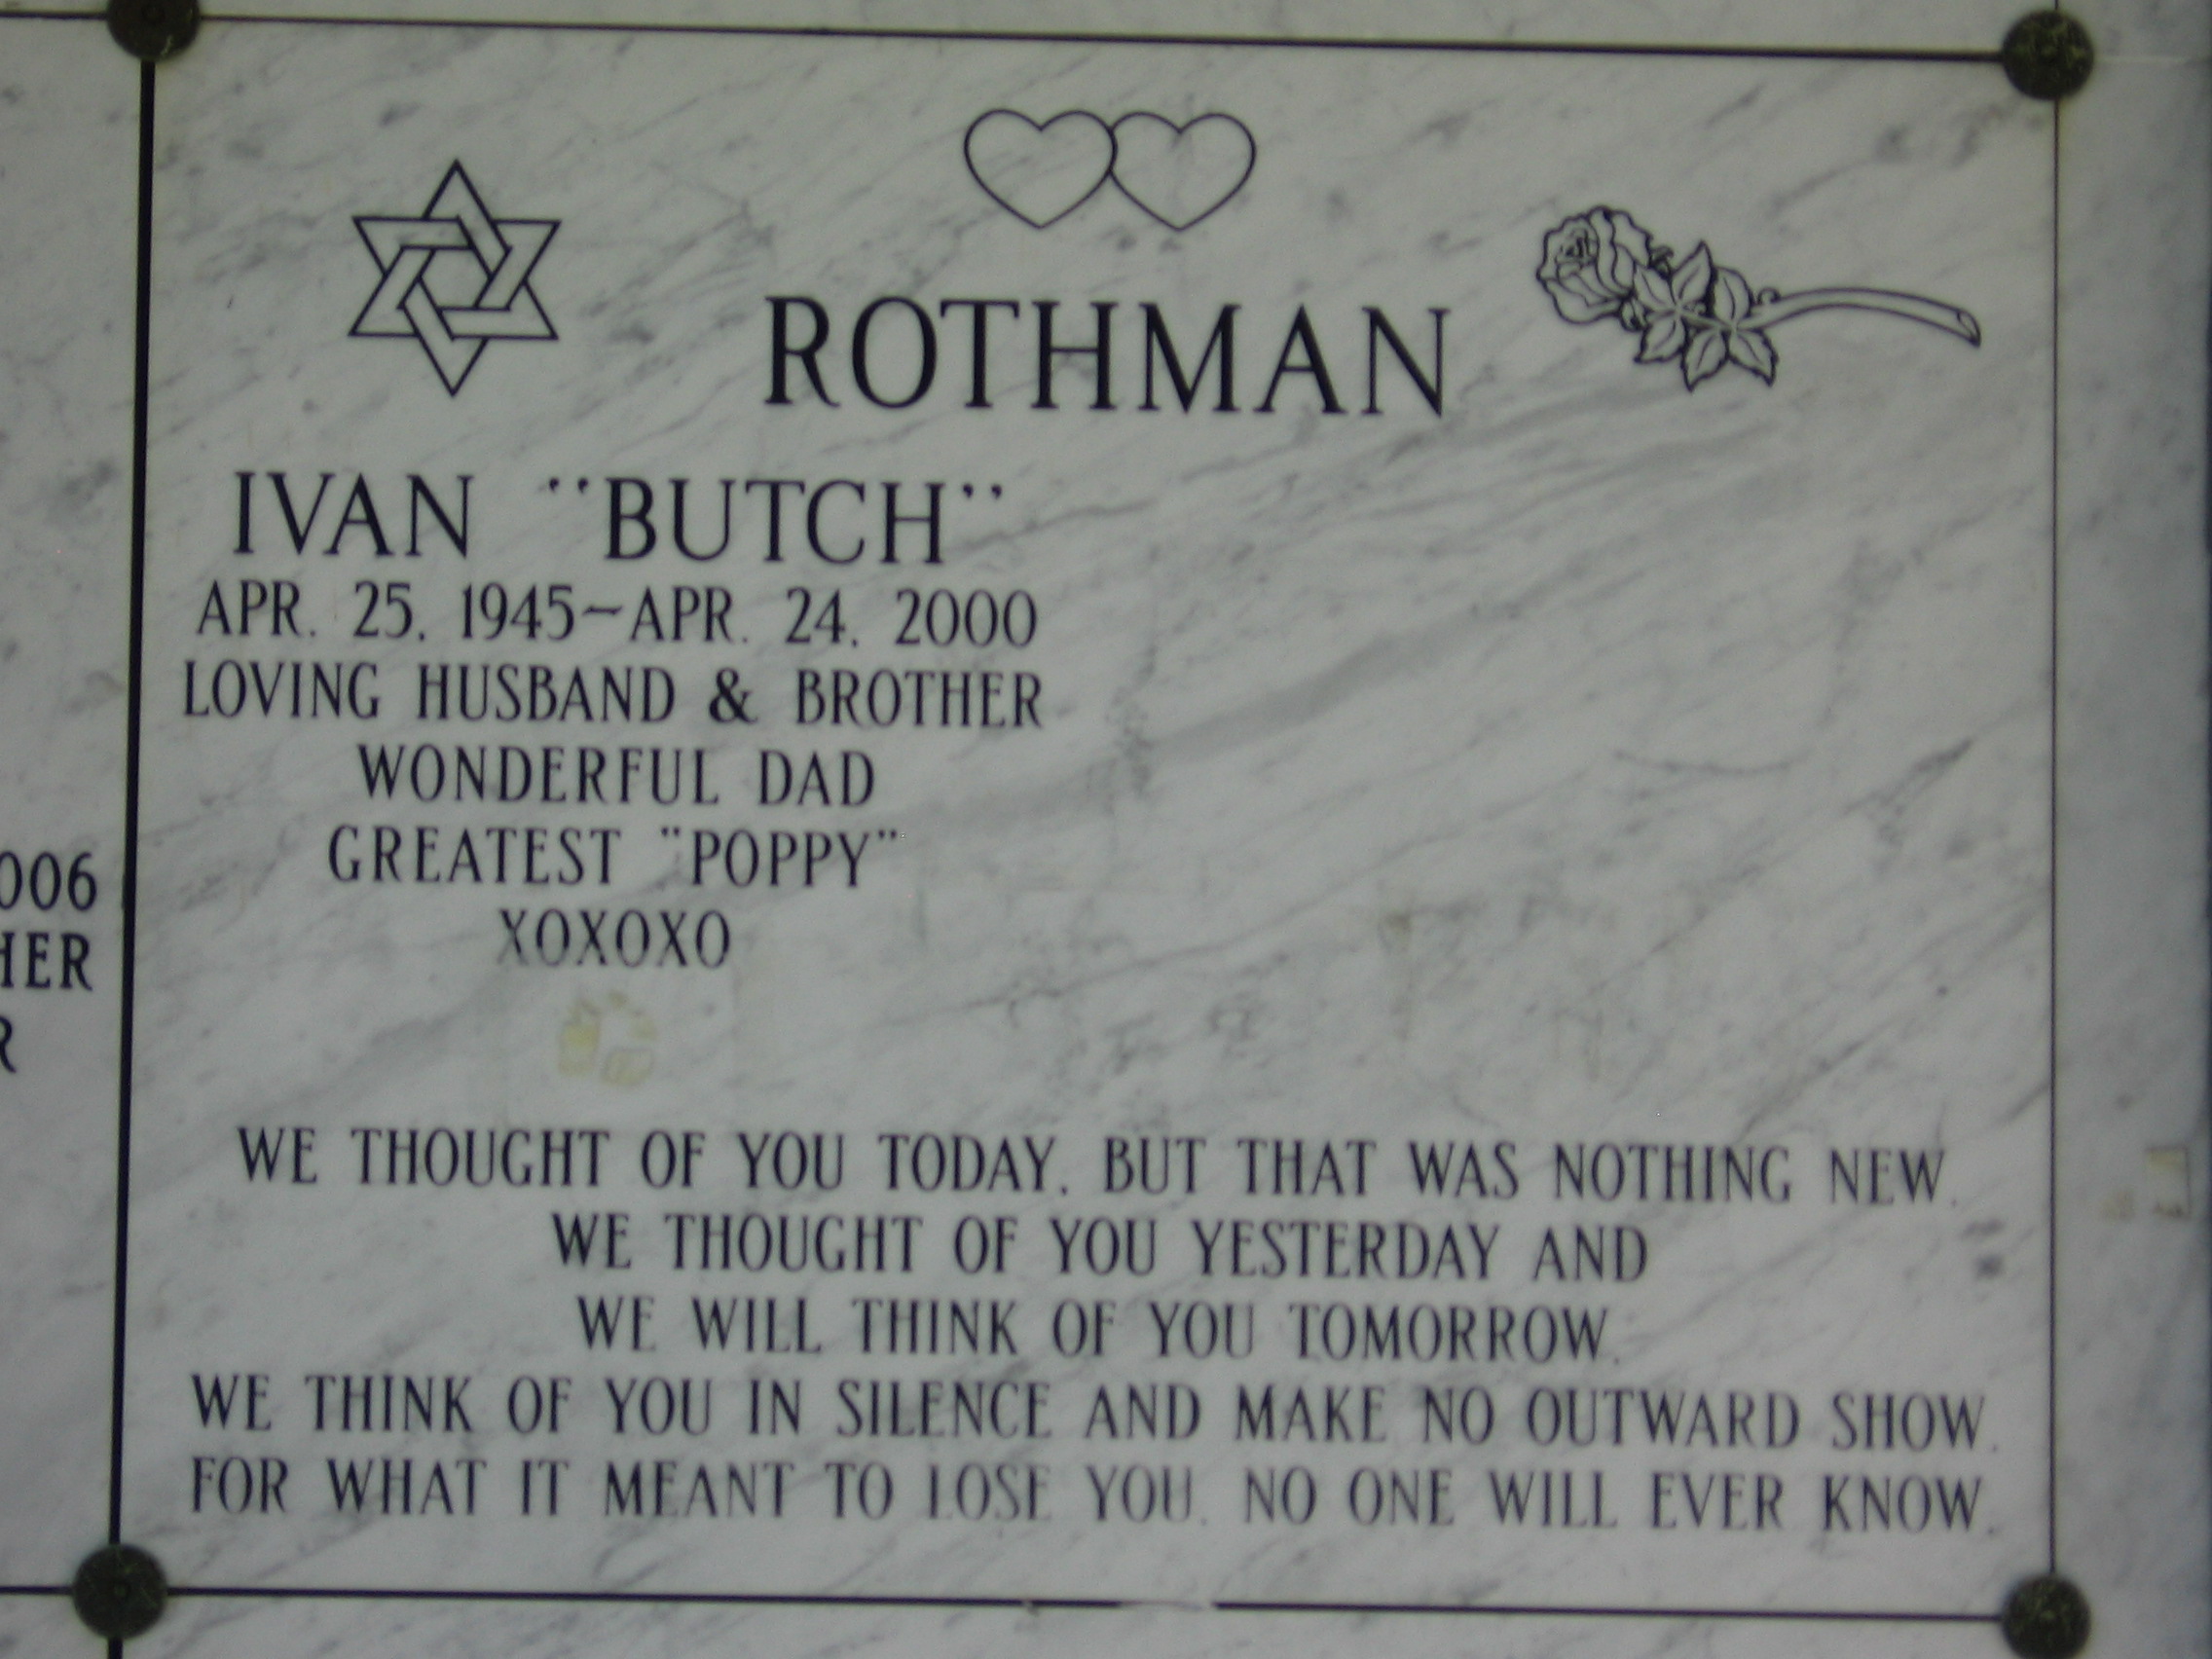 Ivan "Butch" Rothman